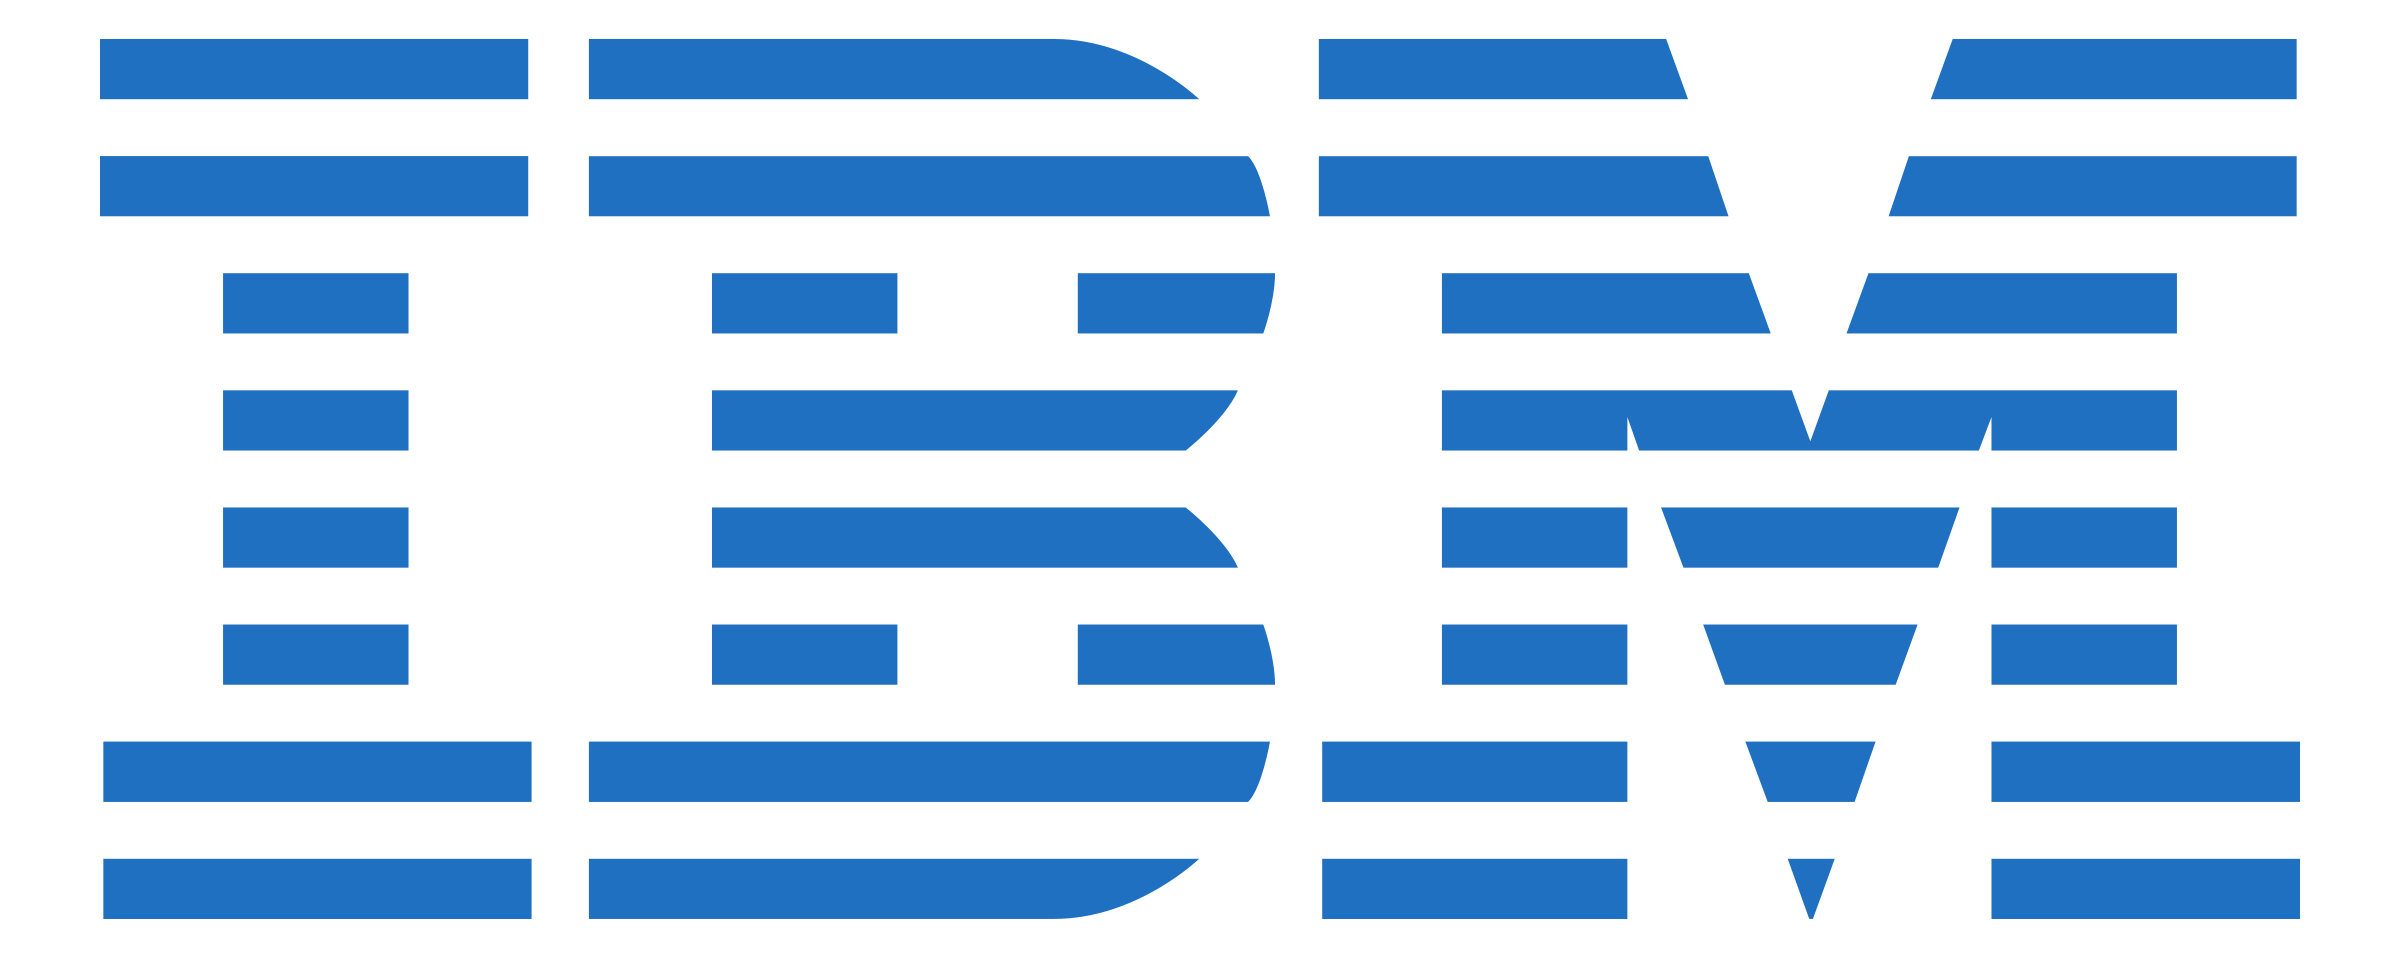 Software - IBM Process Mining